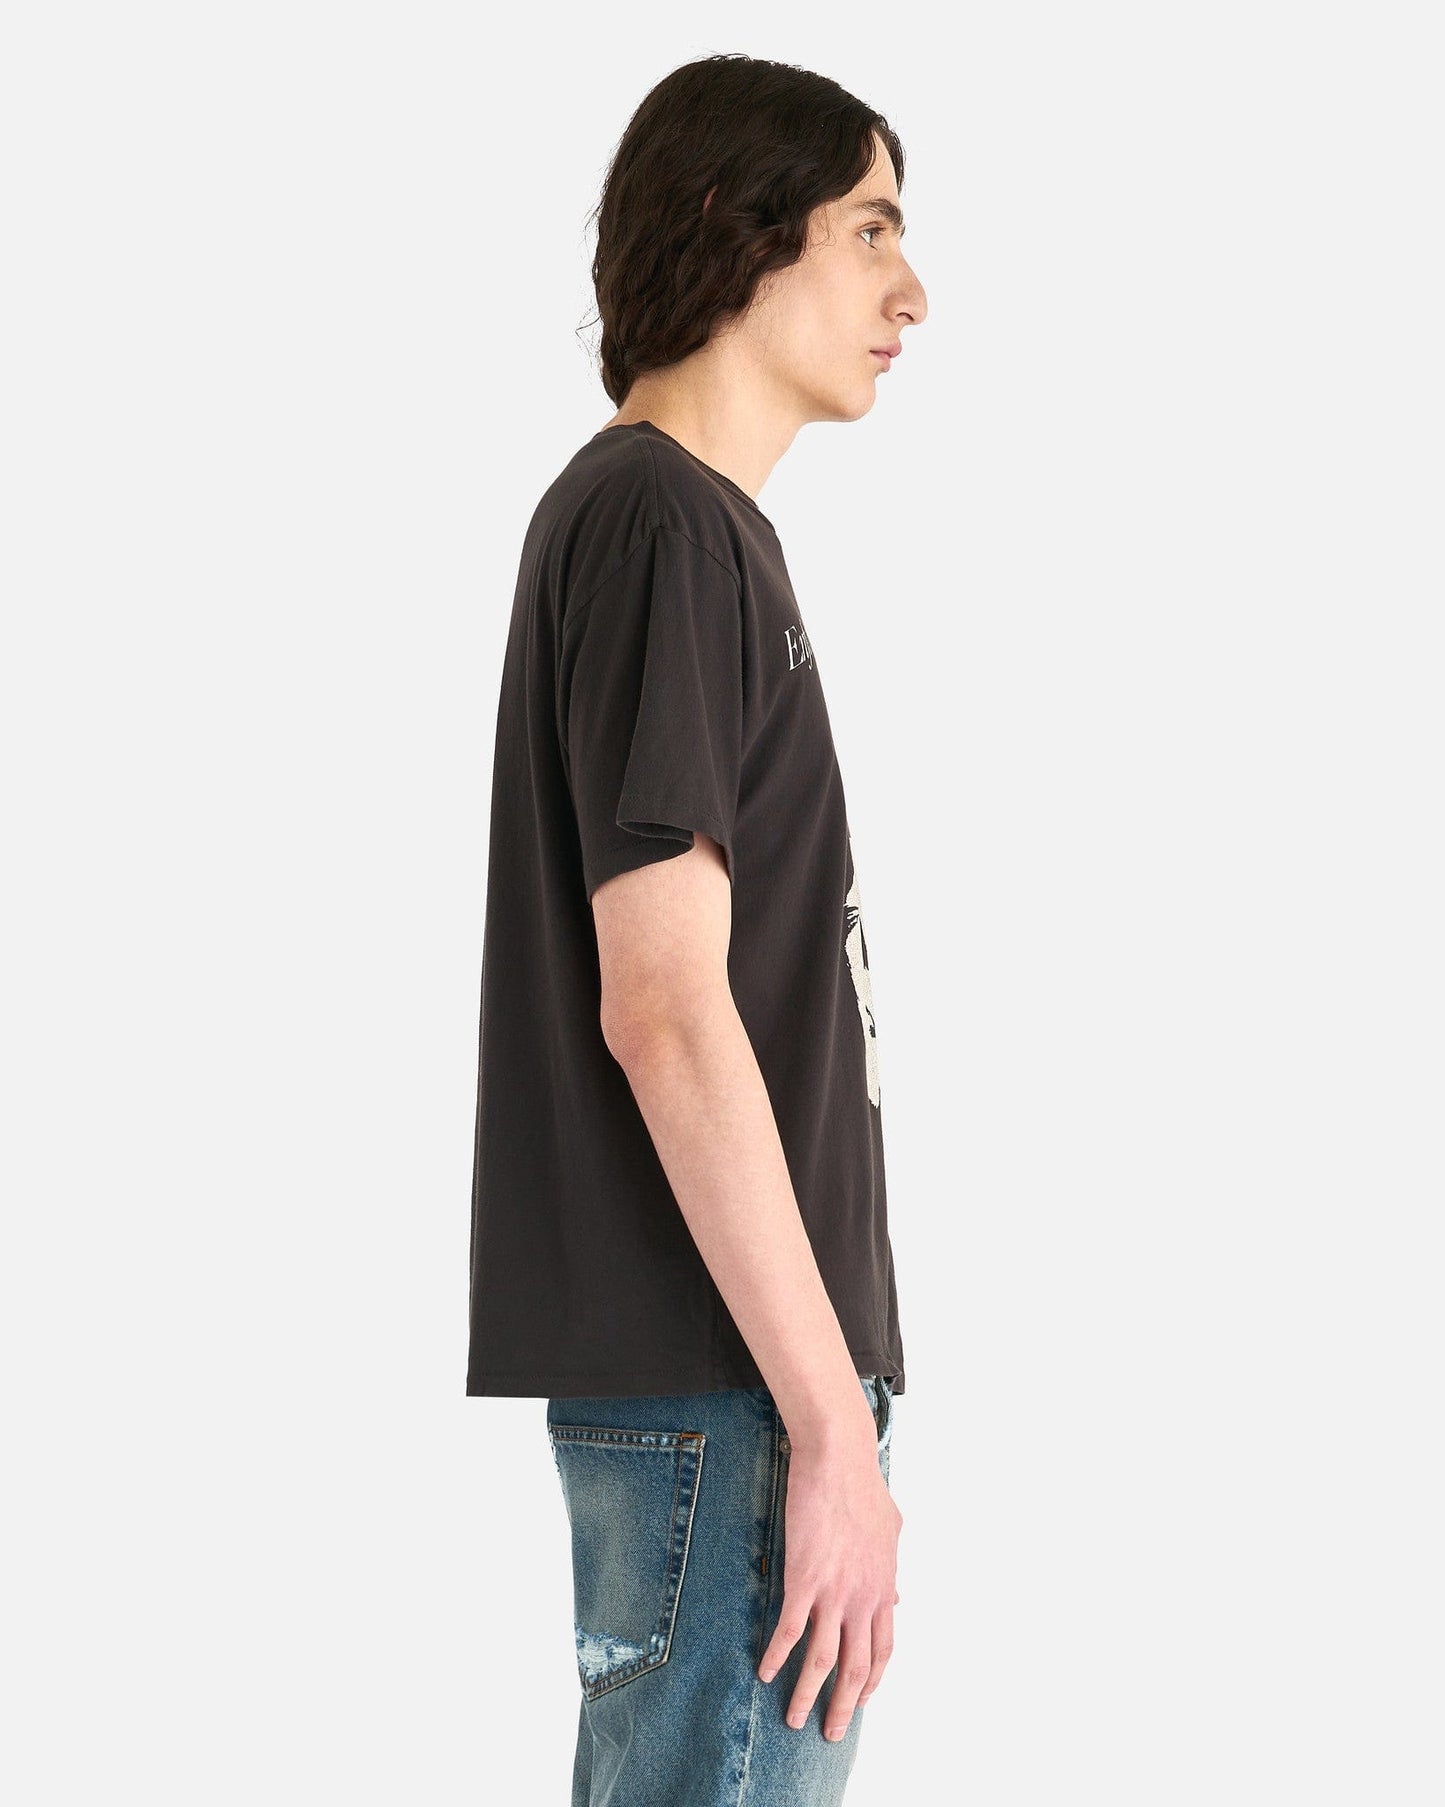 Enfants Riches Deprimes Men's T-Shirts Sleep Sound T-Shirt in Faded Black/Cream